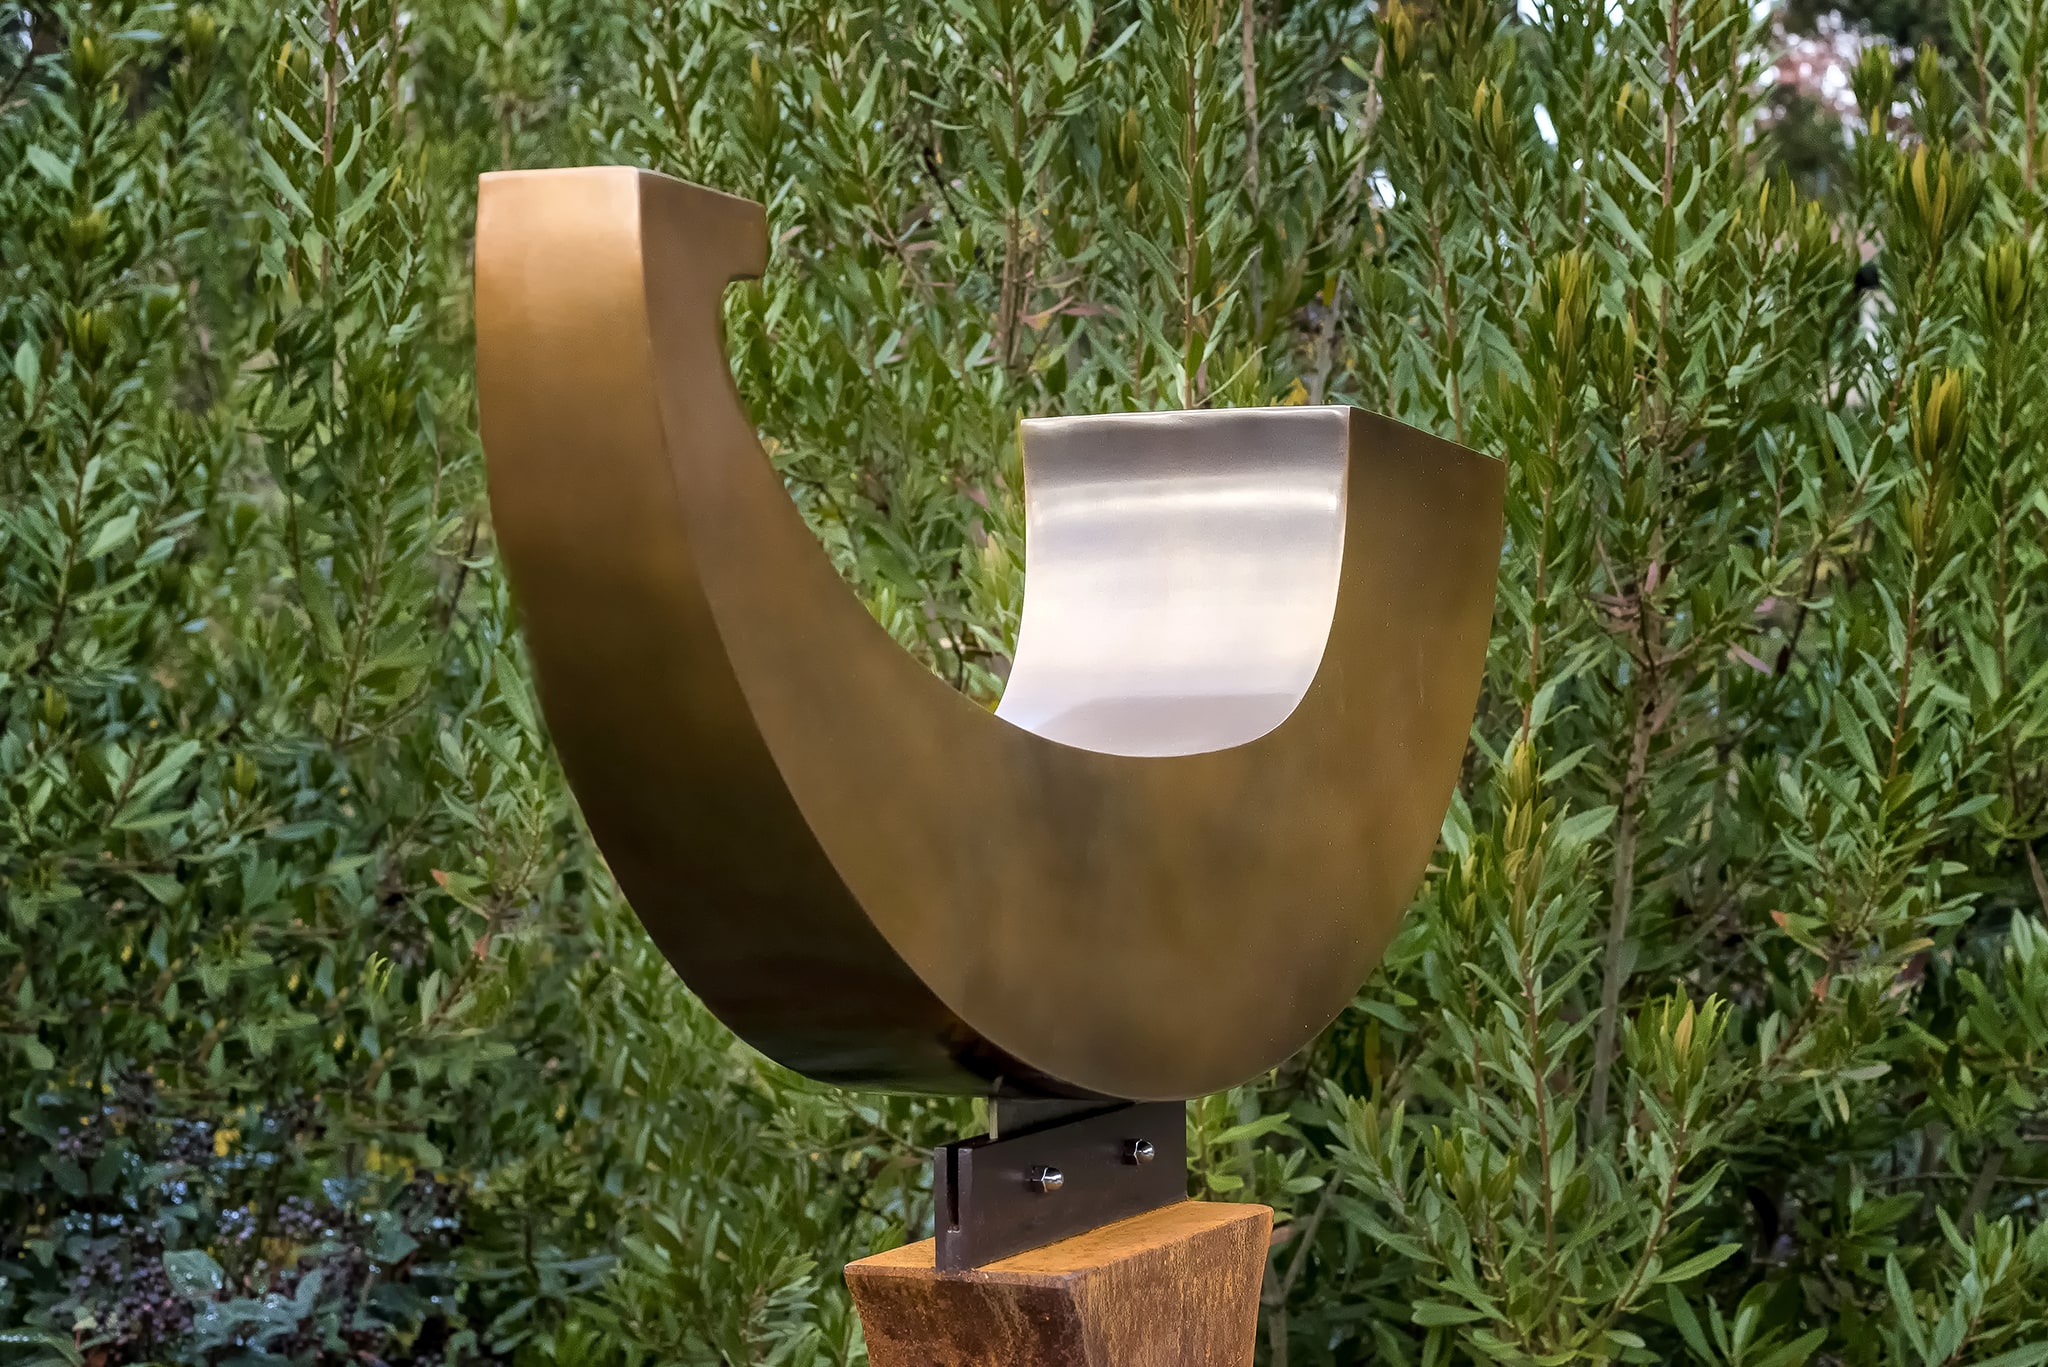 Nordic Arc, 5' 7" x 2' 11" x 11", bronze on Corten steel base